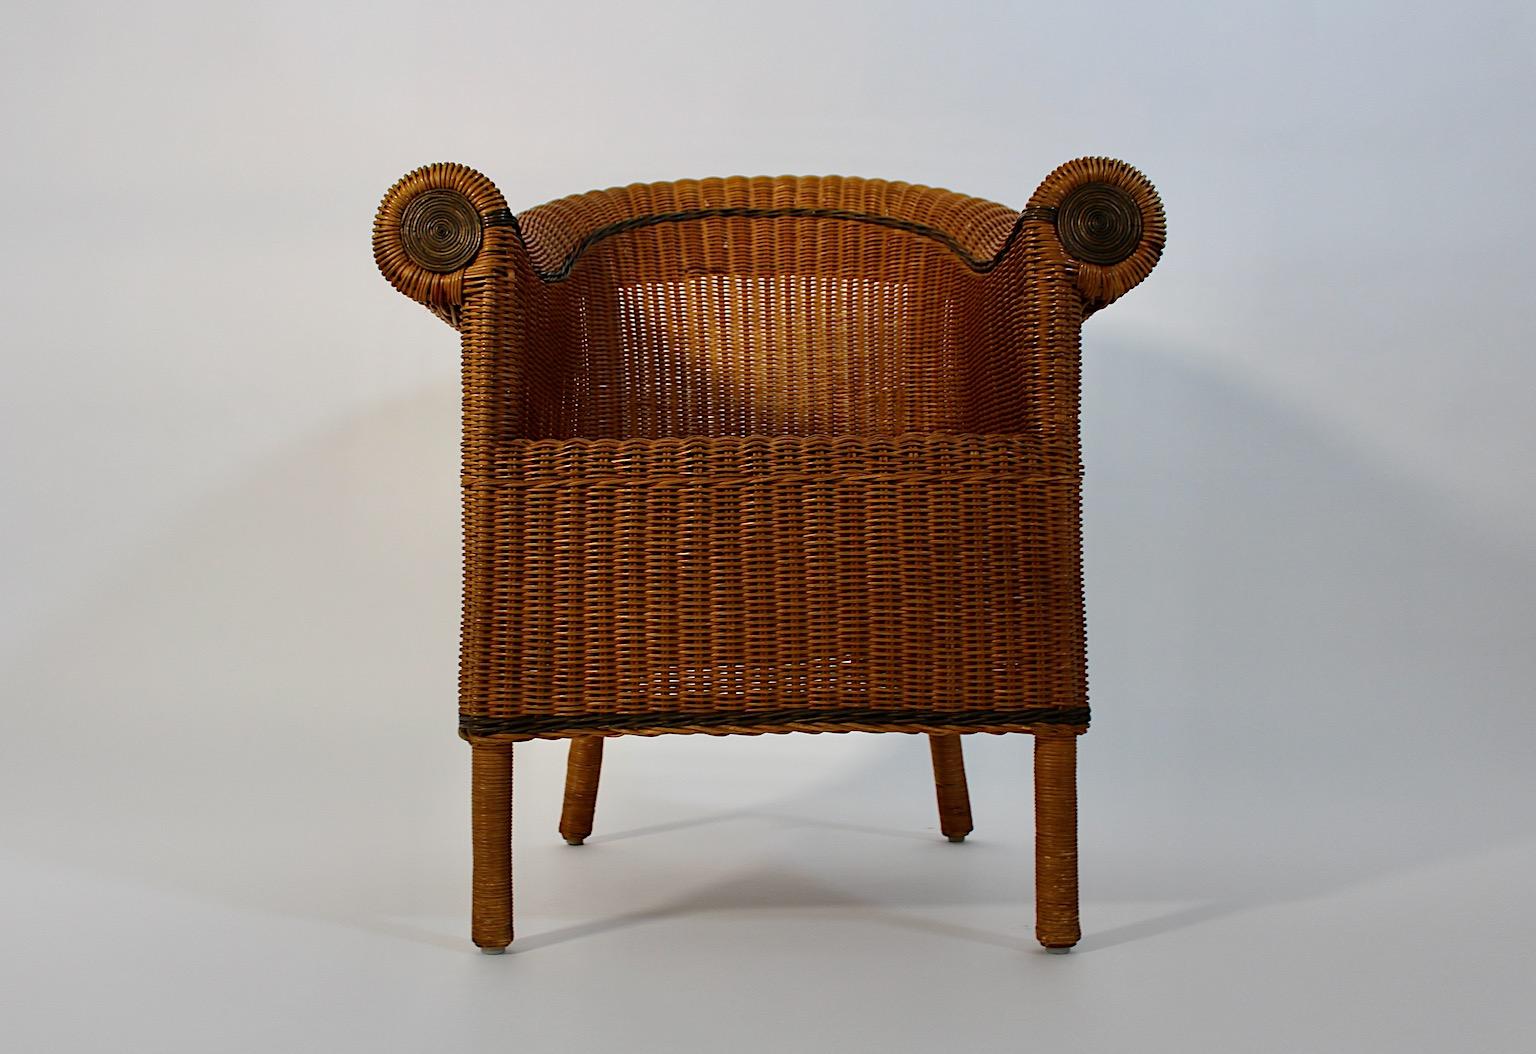 Jugendstil-Rattan-Sessel im Vintage-Stil, Loungesessel Prag-Rudniker Korbwaren, Prag-Rudniker, um 1910 (Frühes 20. Jahrhundert) im Angebot